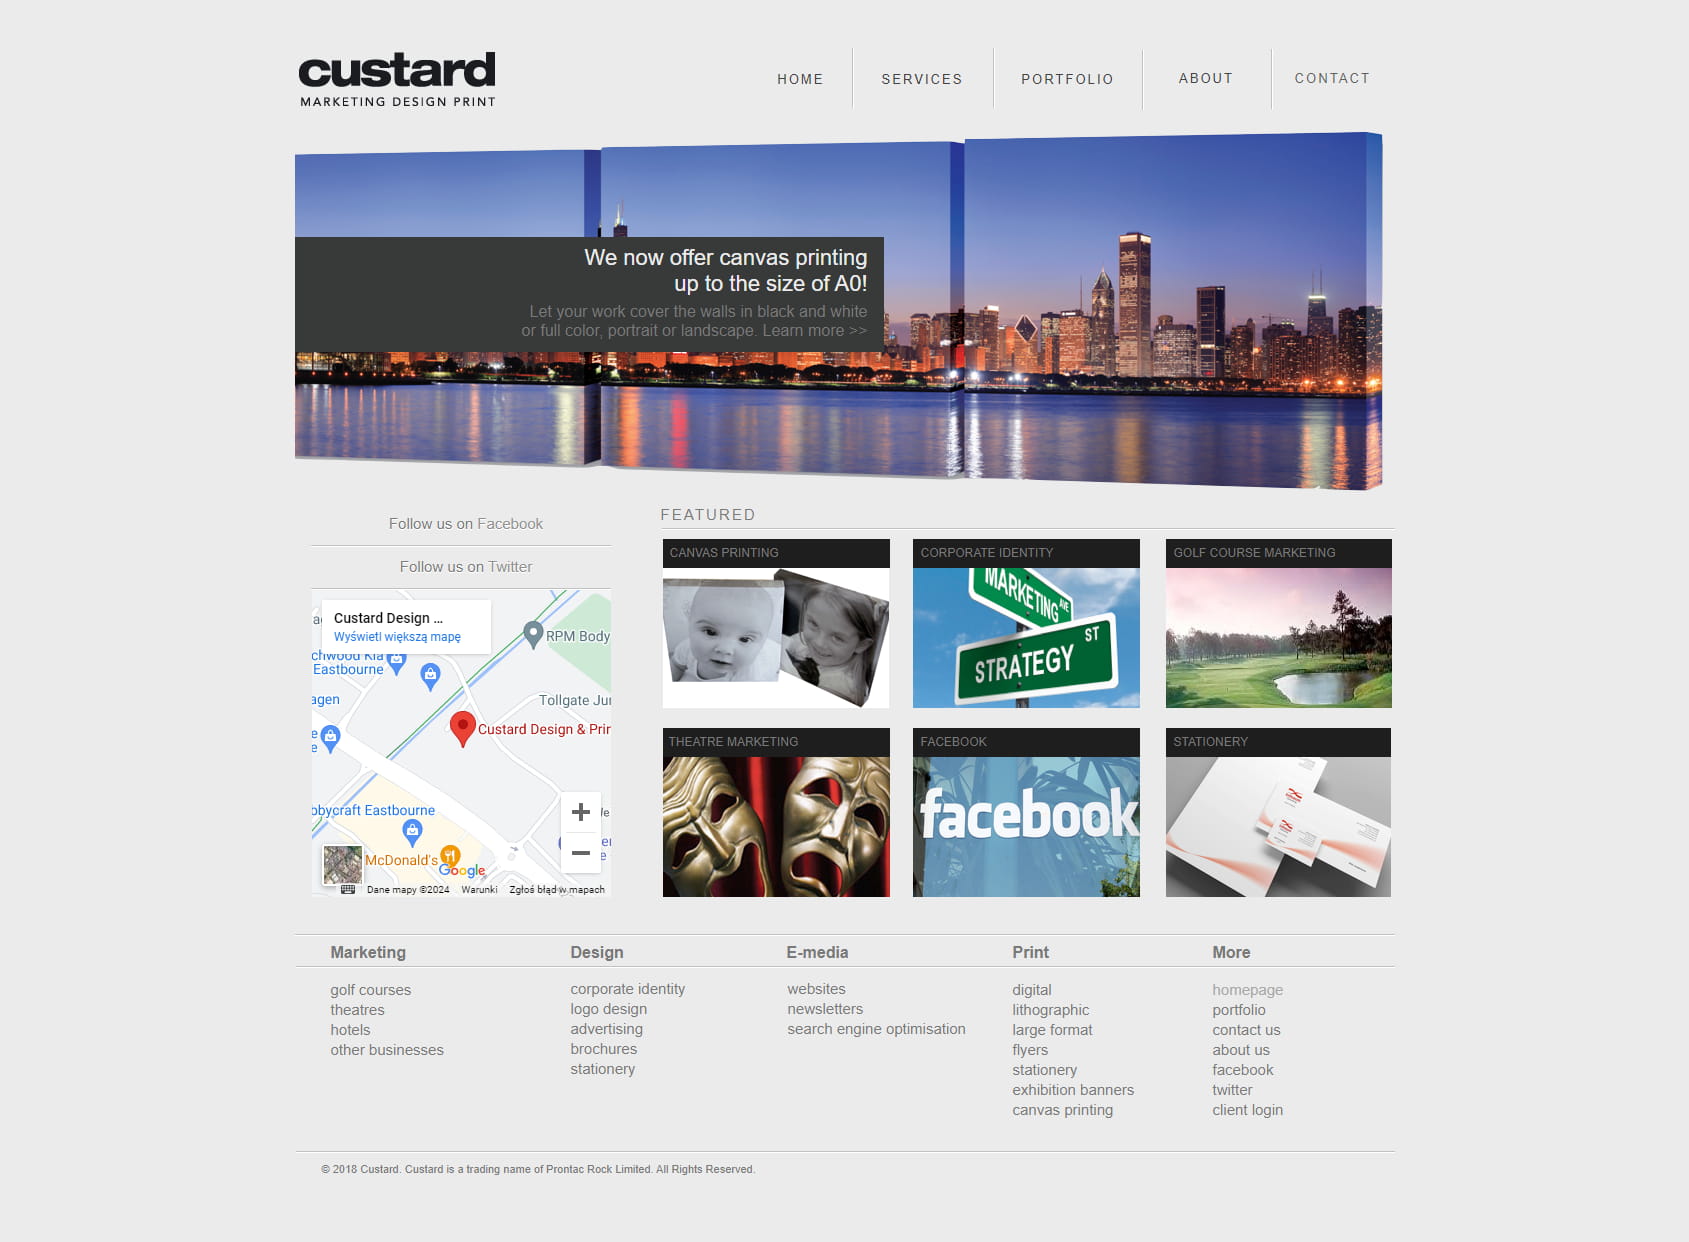 Custard Design & Print